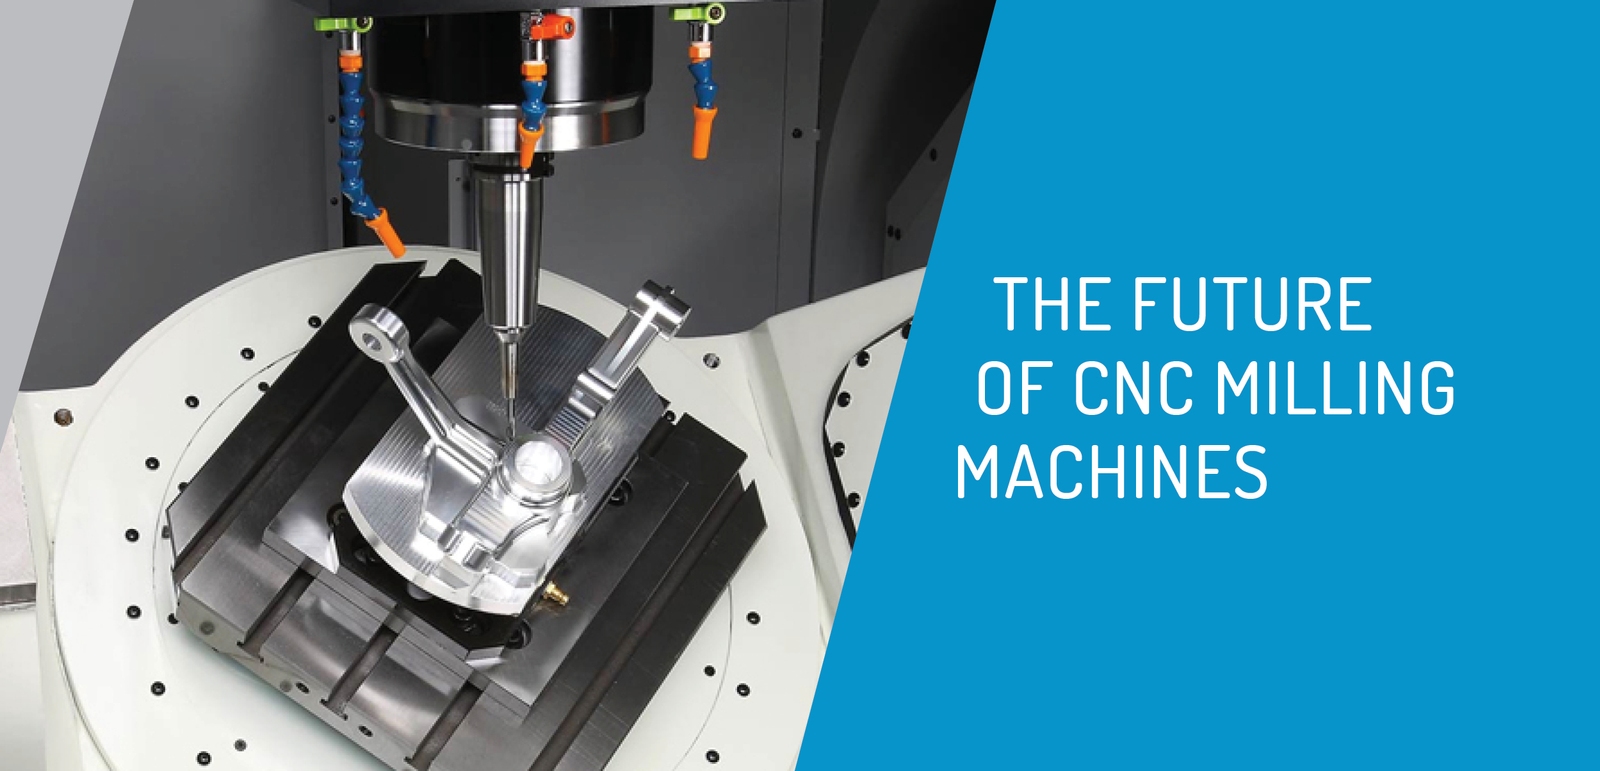 The Future of CNC Milling Machine Technology